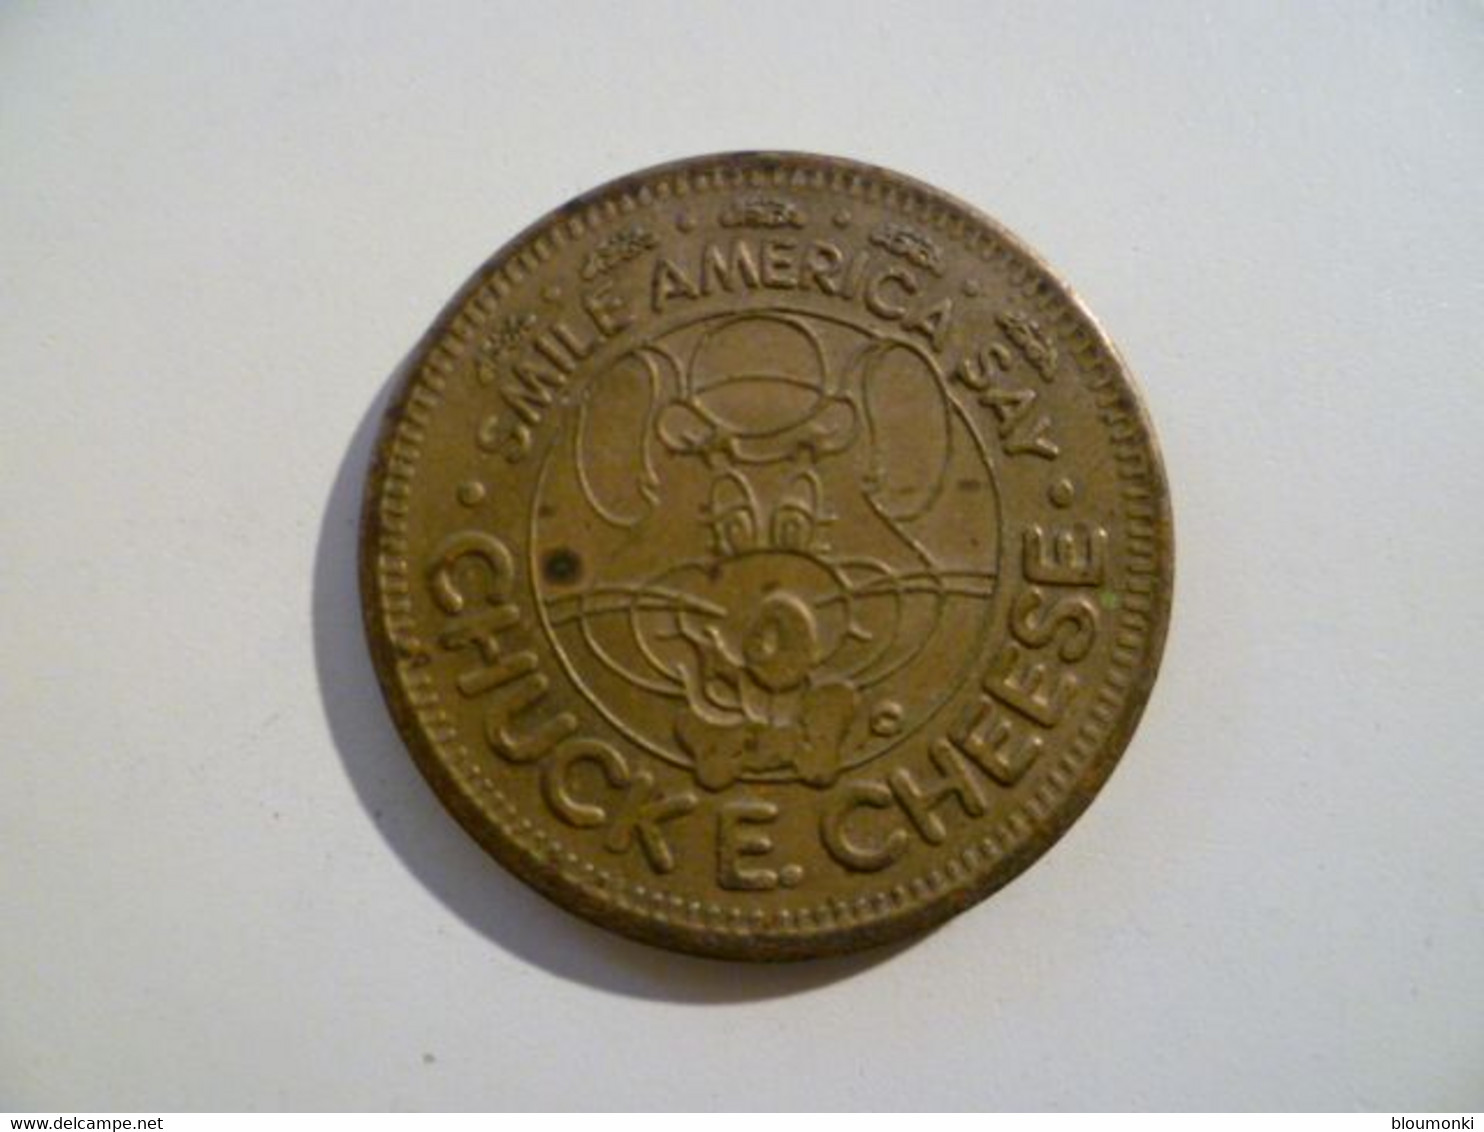 Jeton Médaille  / Etats Unis / USA Coins / Chuck E Cheese / 25c In Pizza We Trust 1988 - Firmen